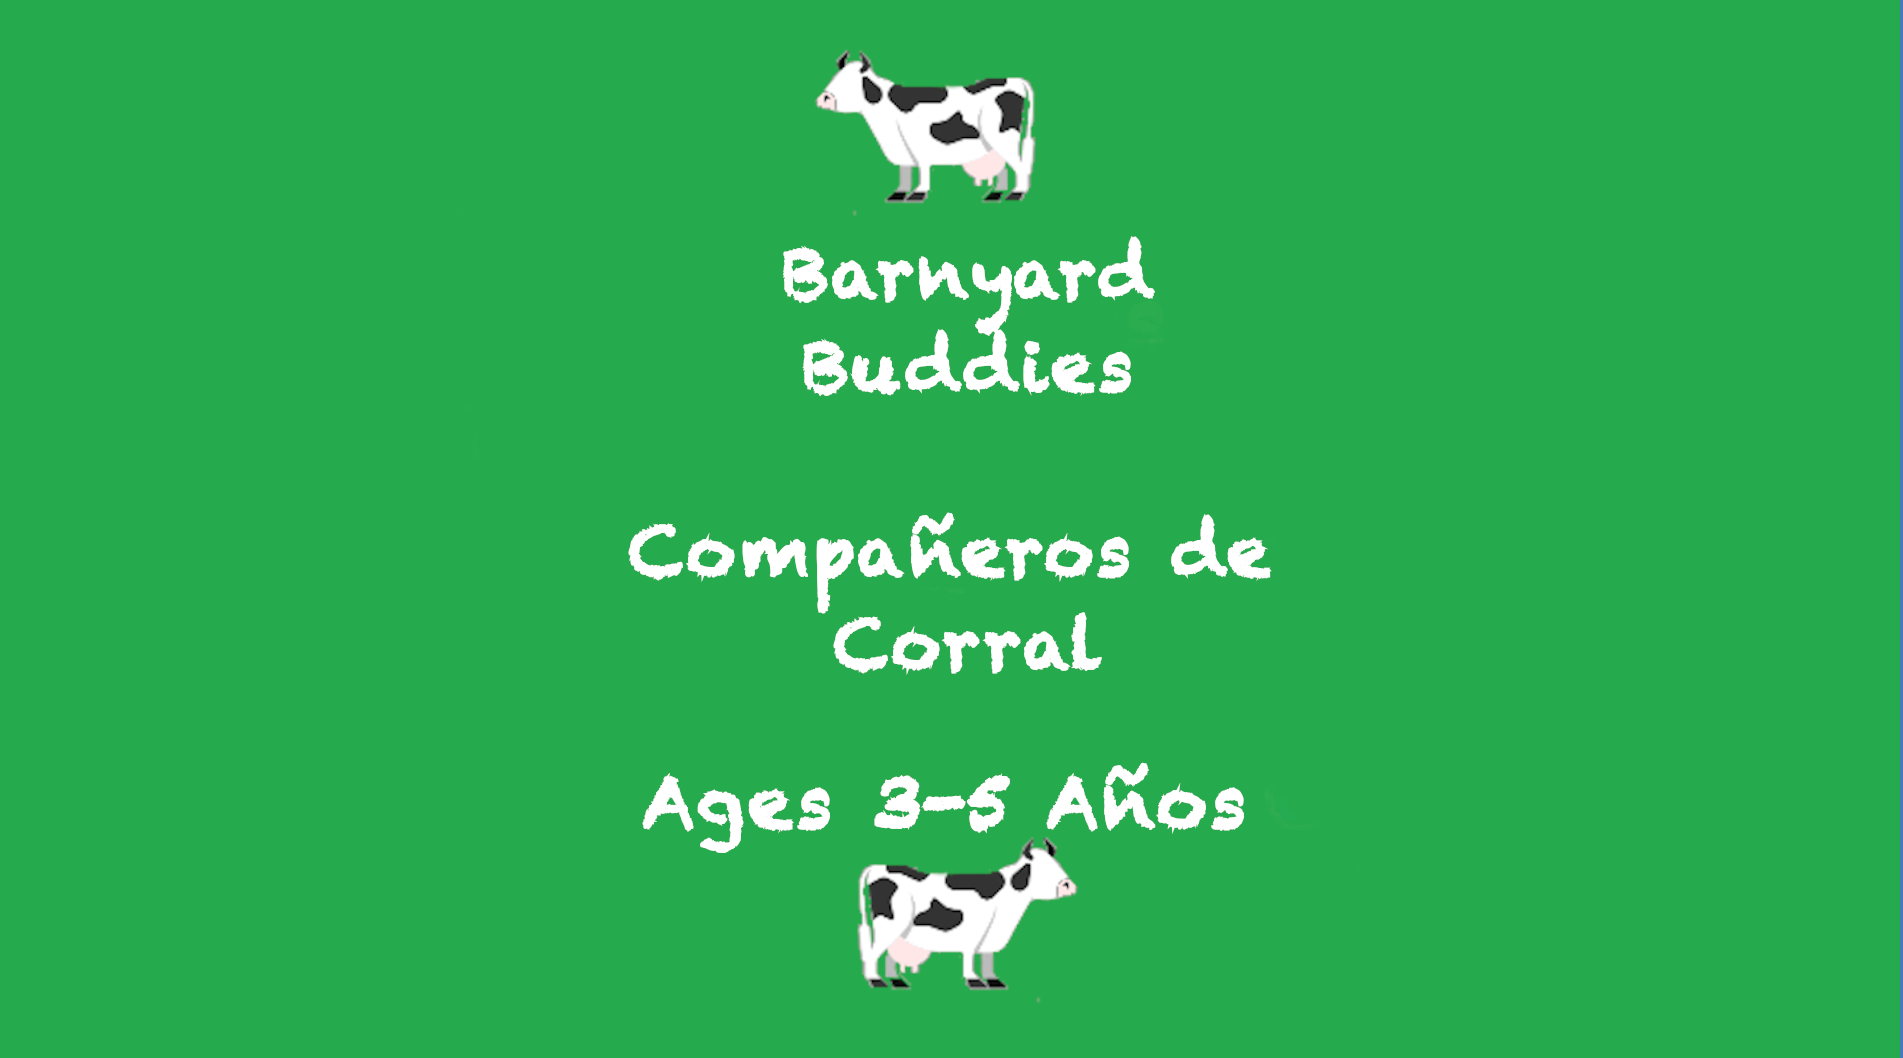 Barnyard Buddies for 3-5 year olds